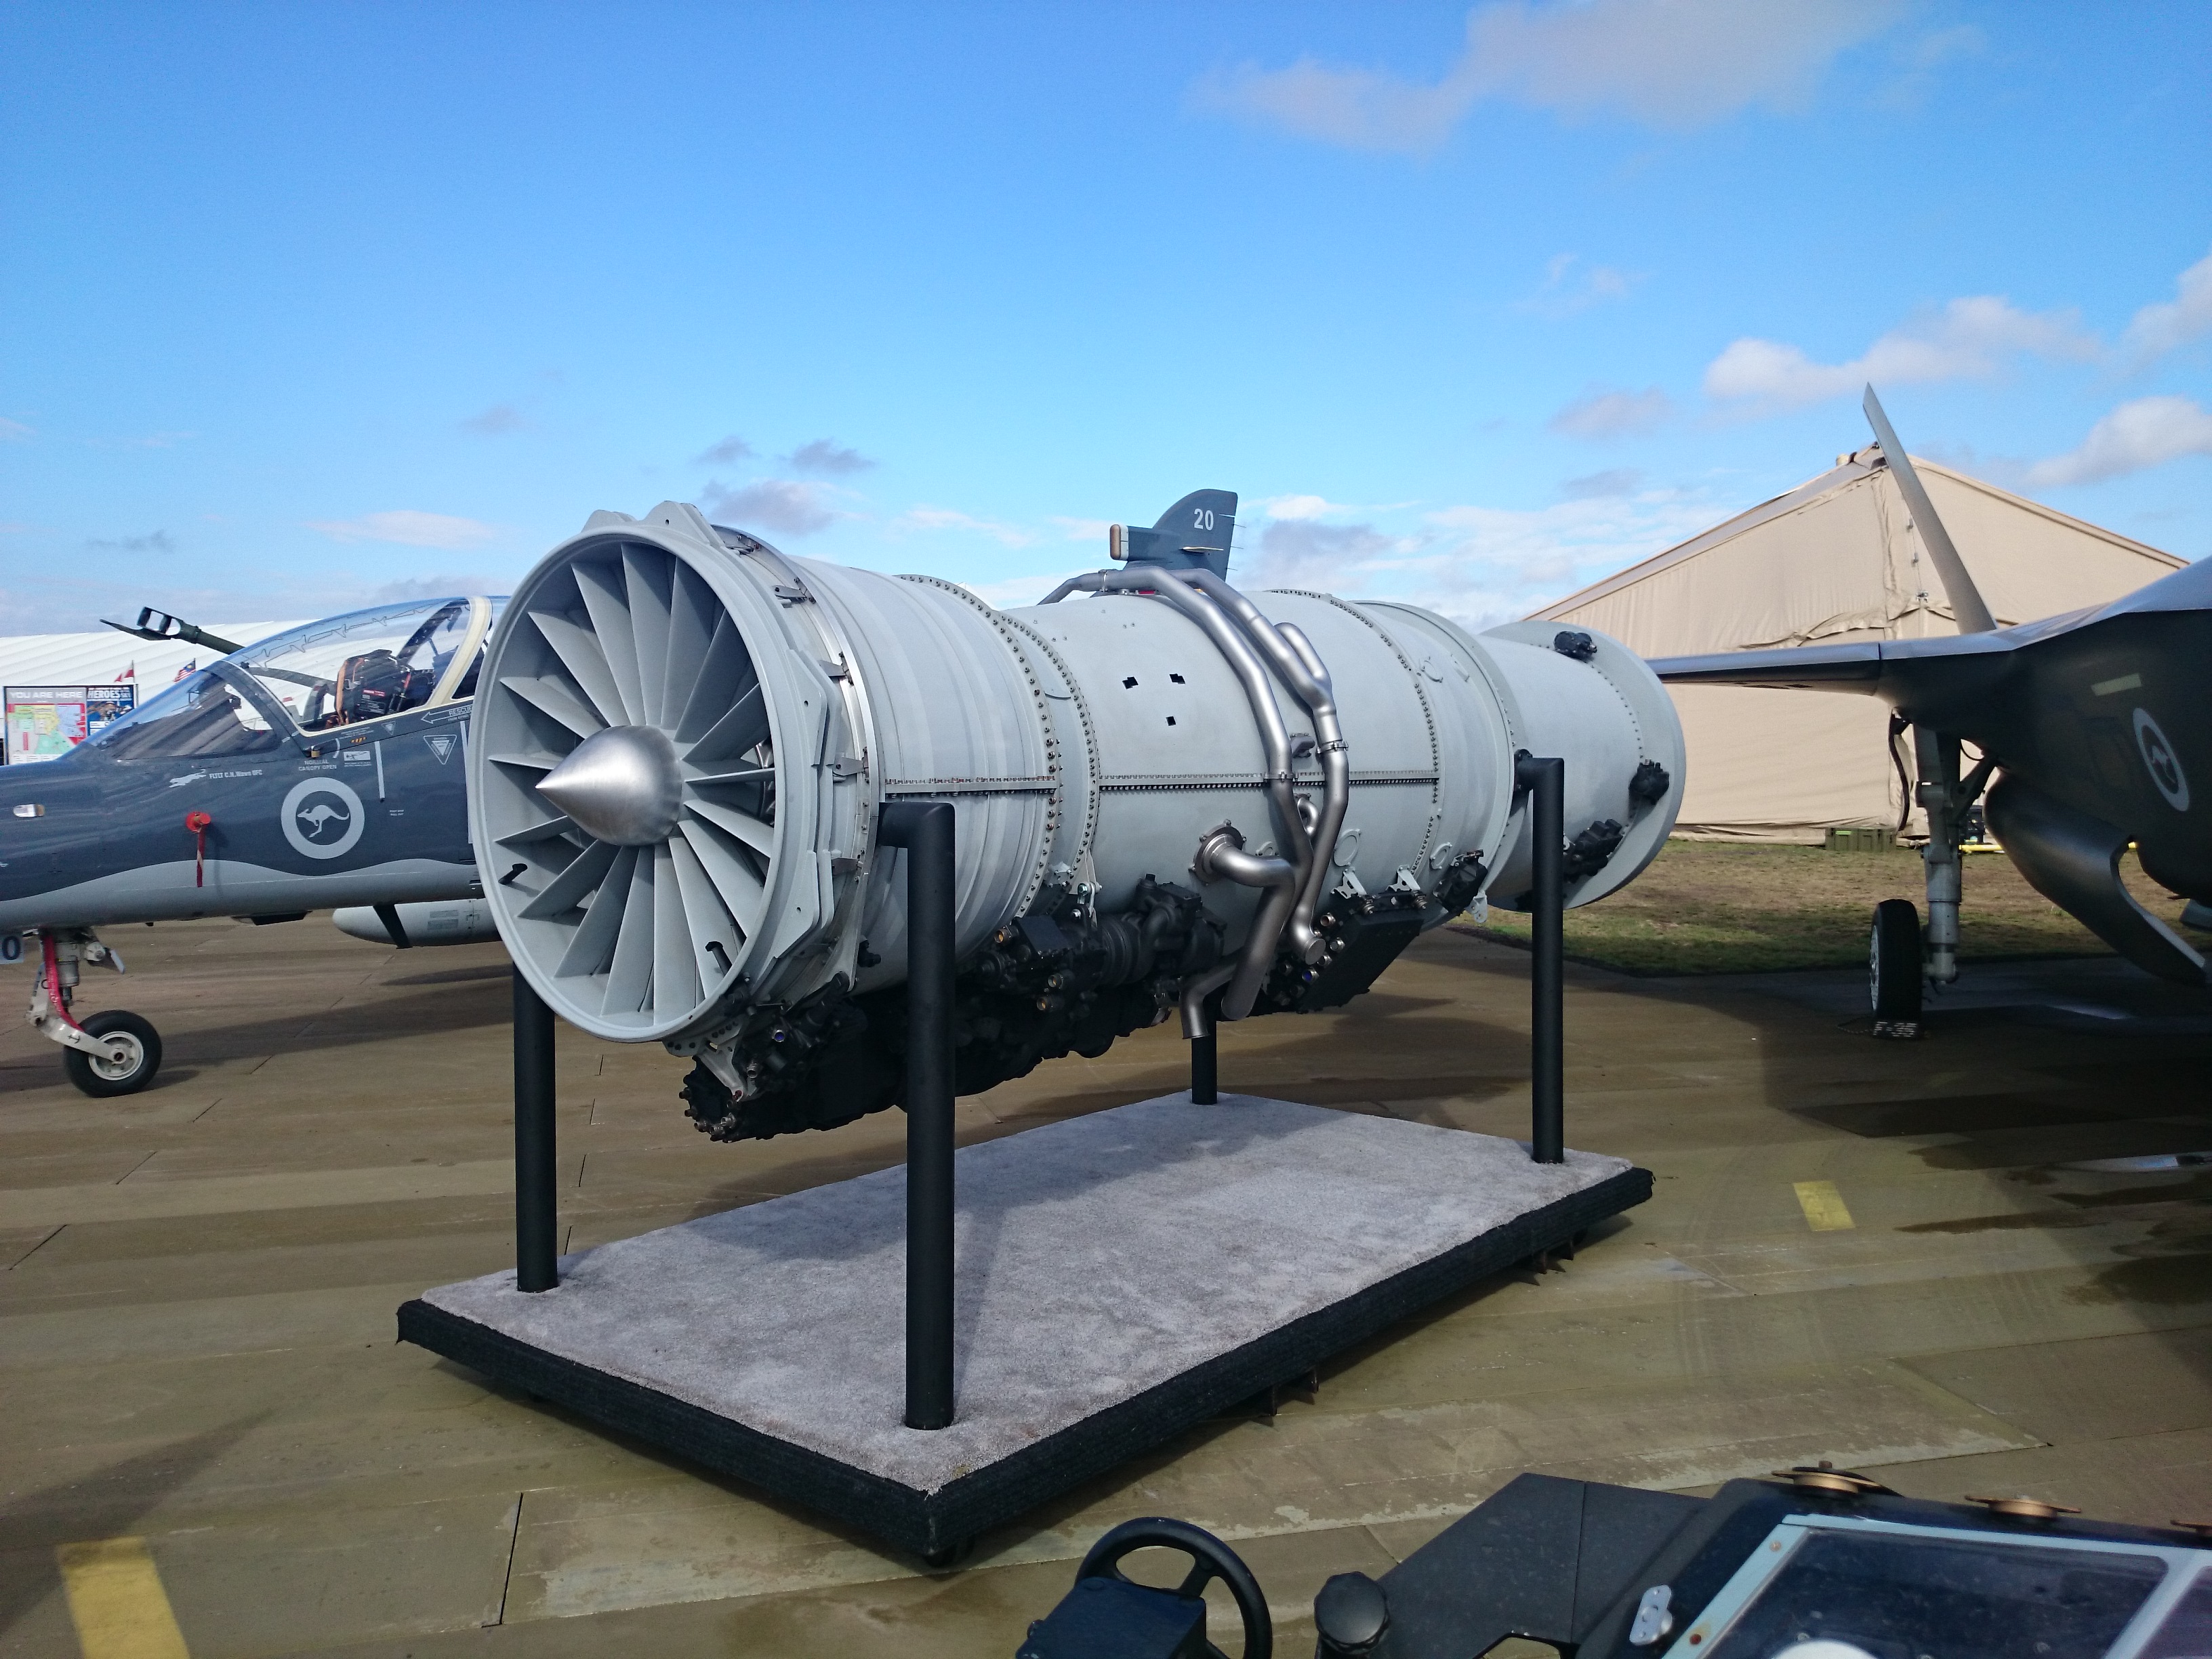 Pratt_%26_Whitney_F135-PW-100_engine_mock-up_on_display_at_the_2015_Australian_International_Airshow.jpg